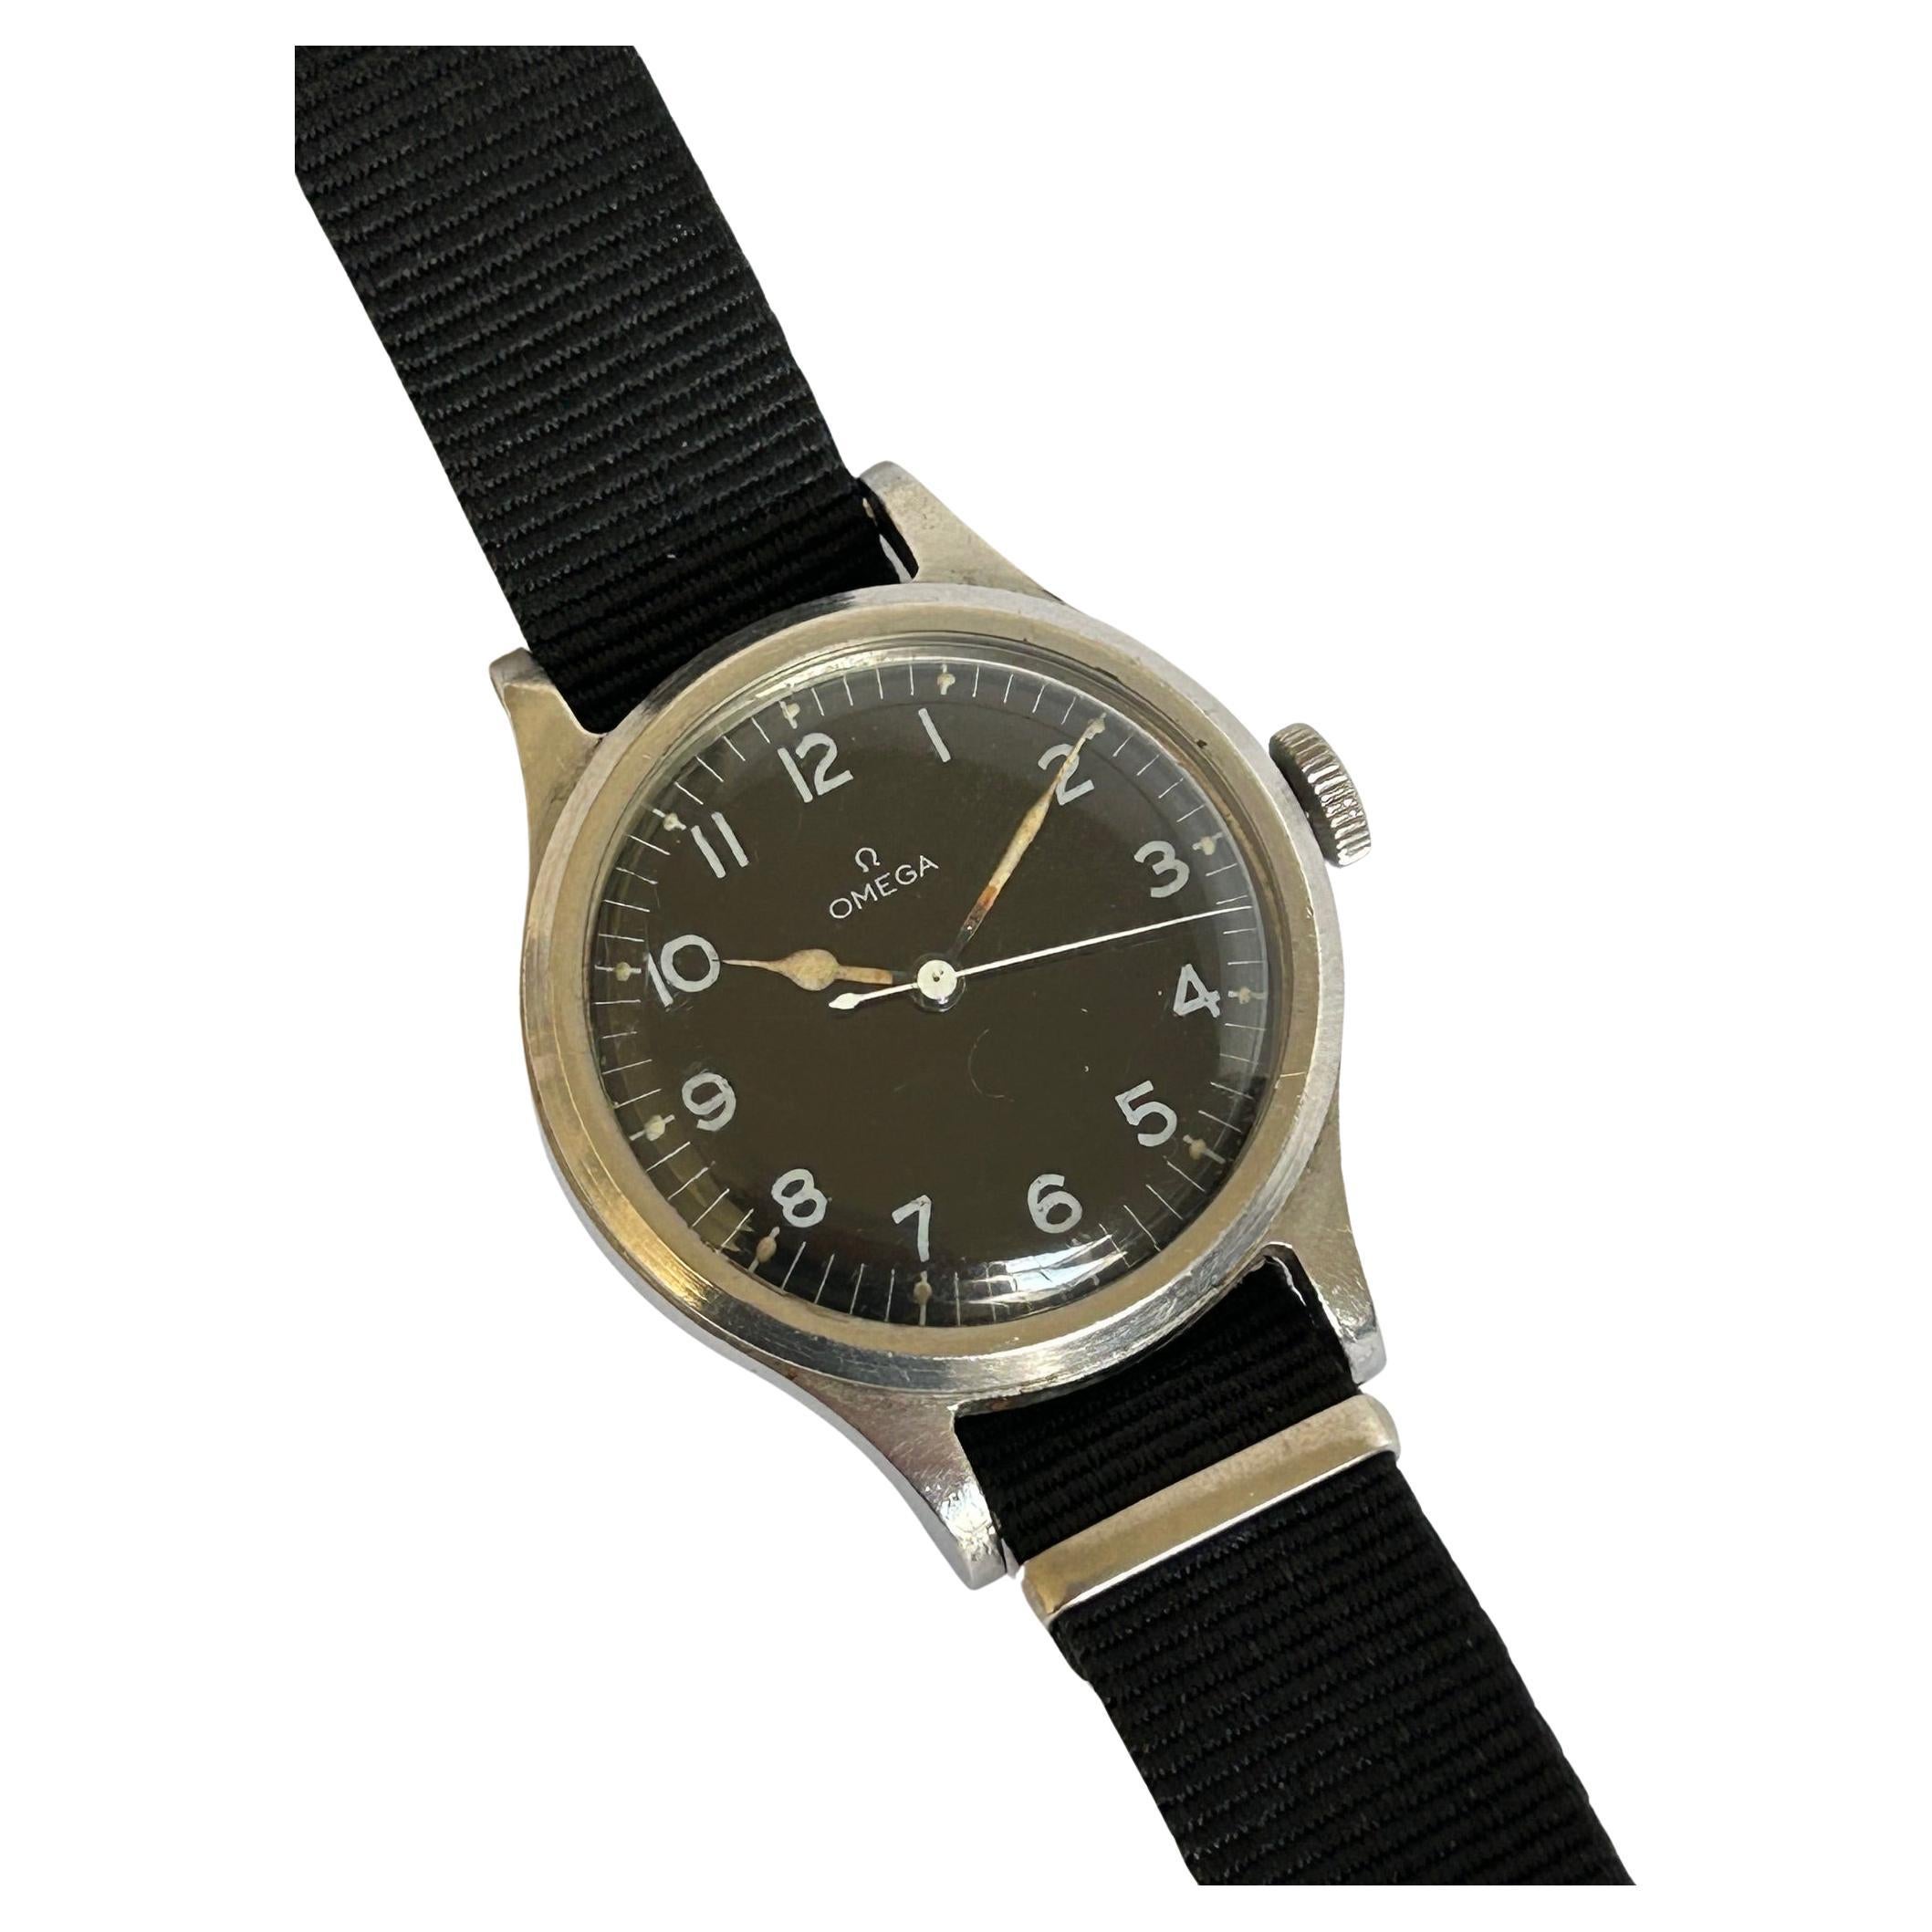 Omega MoD RAF / Air Ministry A. M. 6B / 169 Wristwatch, Patination, Circa 1956 For Sale